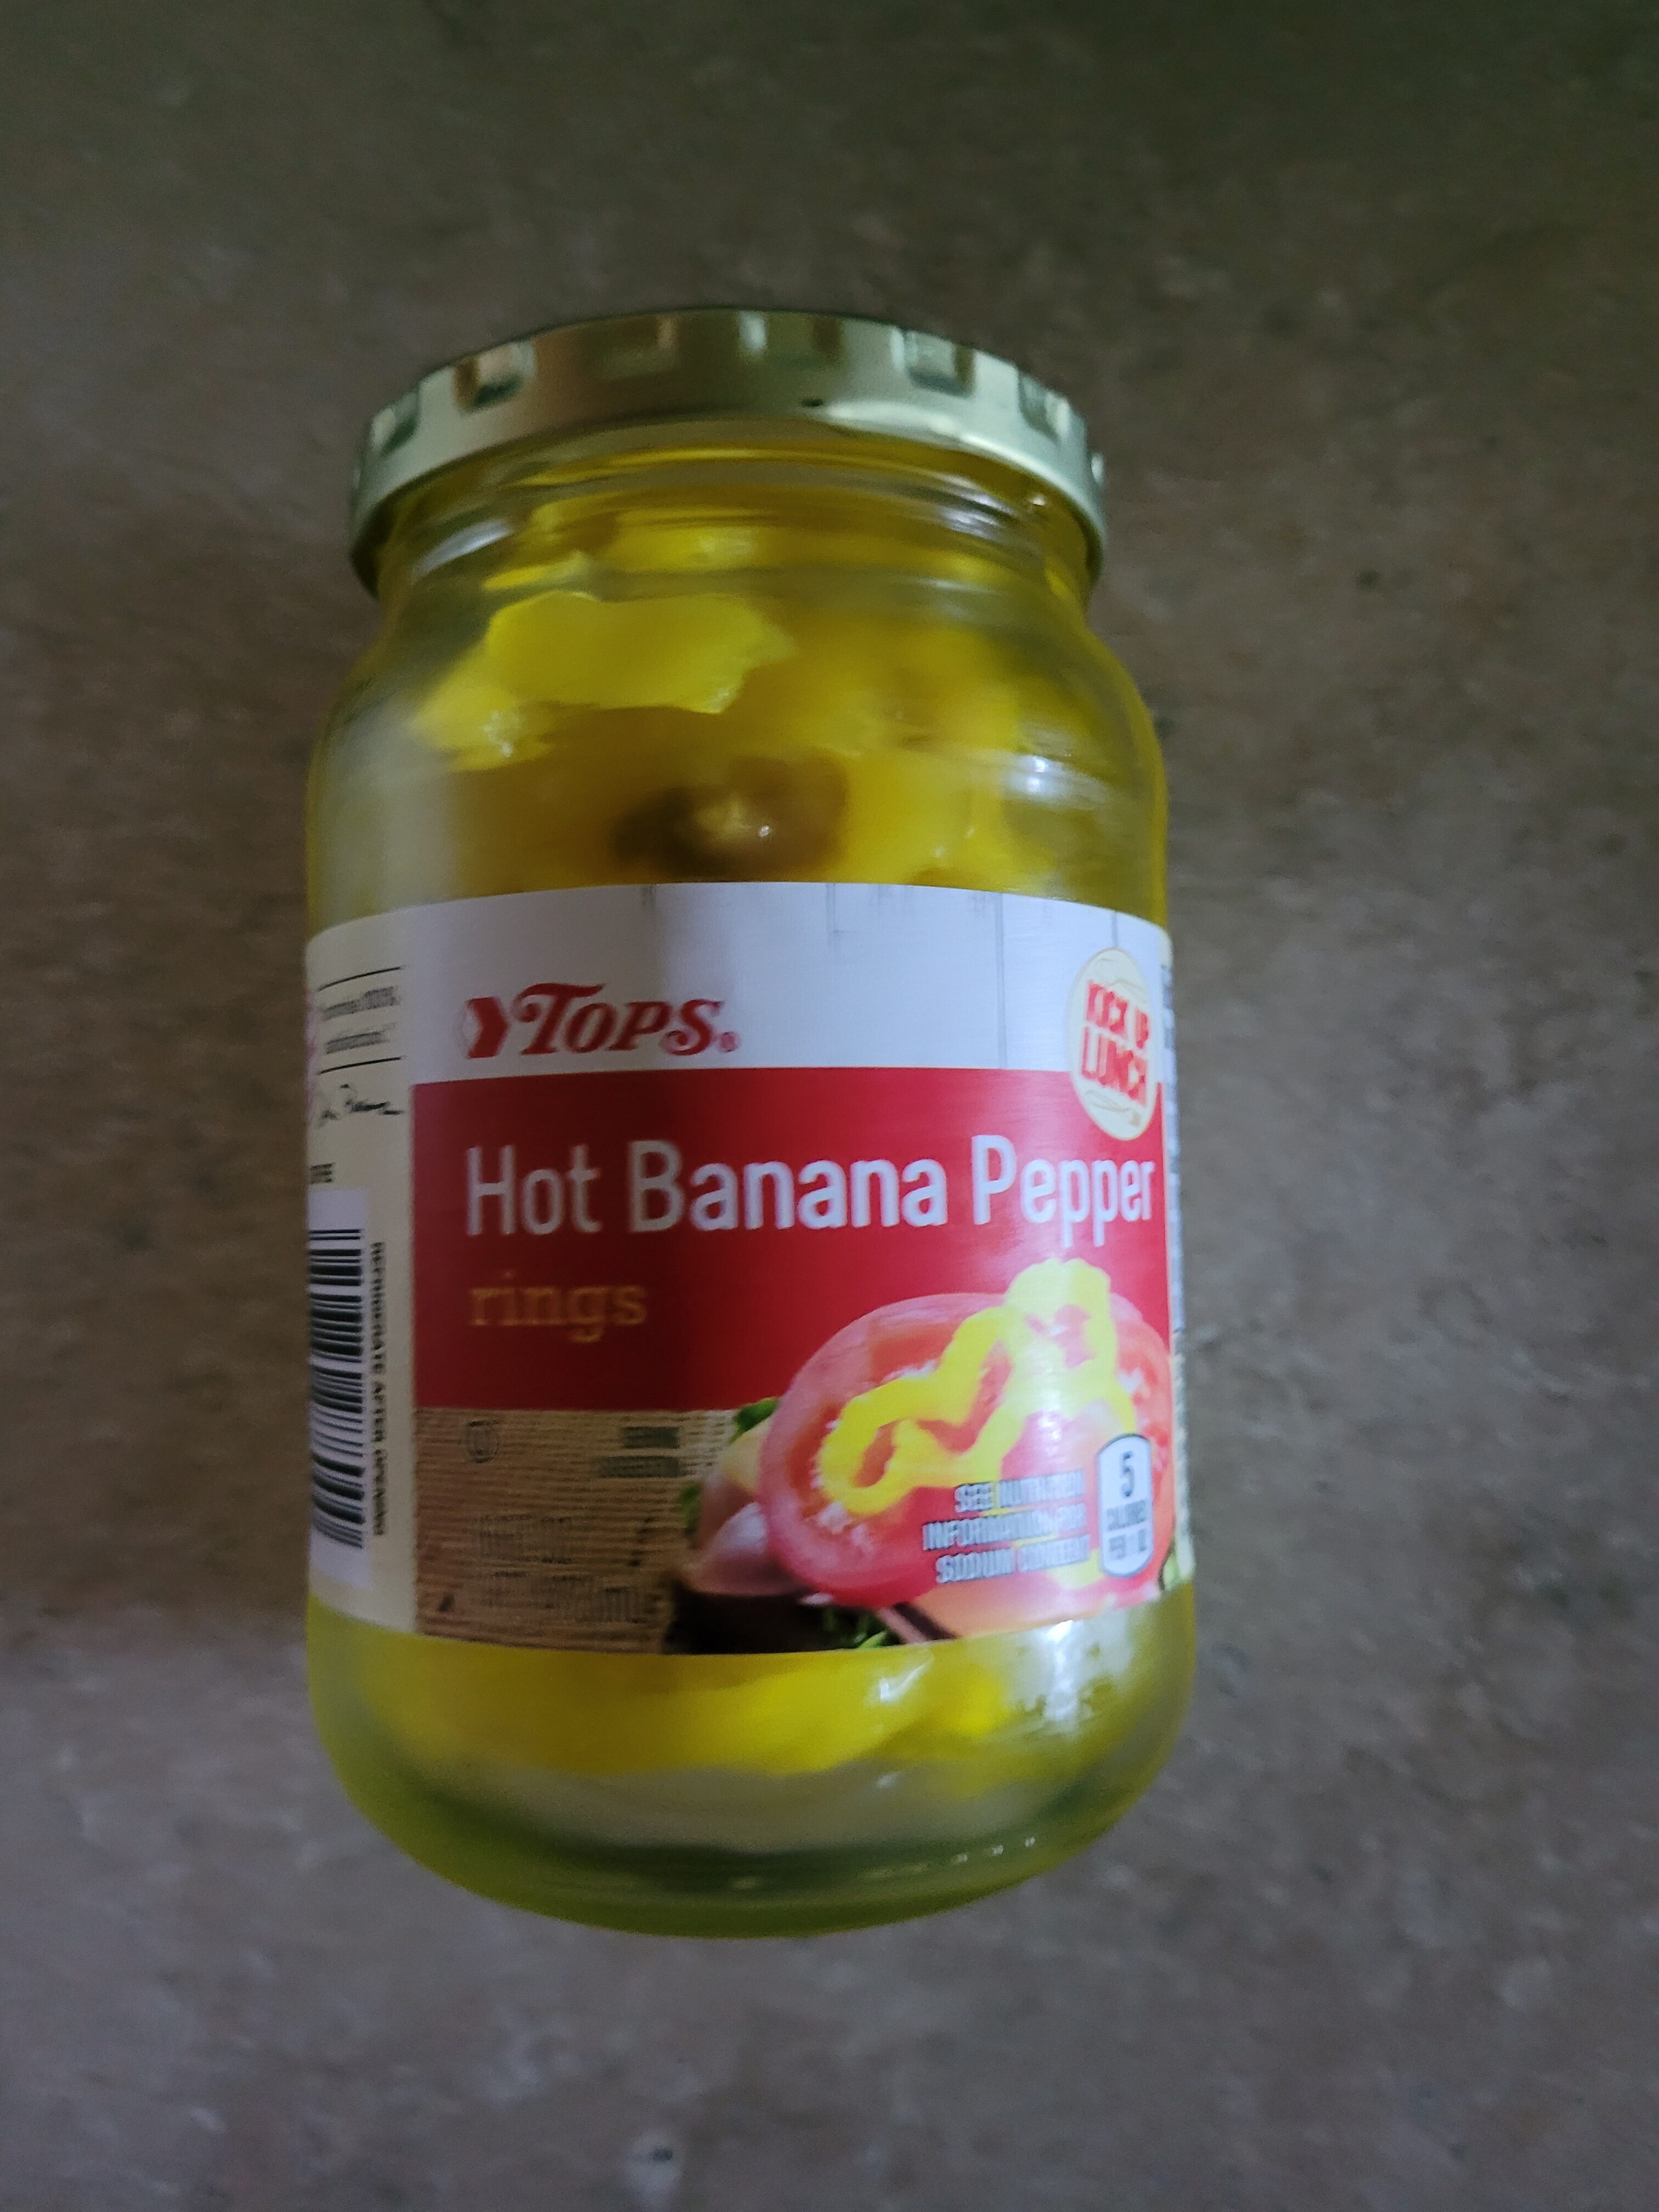 Hot banana pepper rings - Product - en